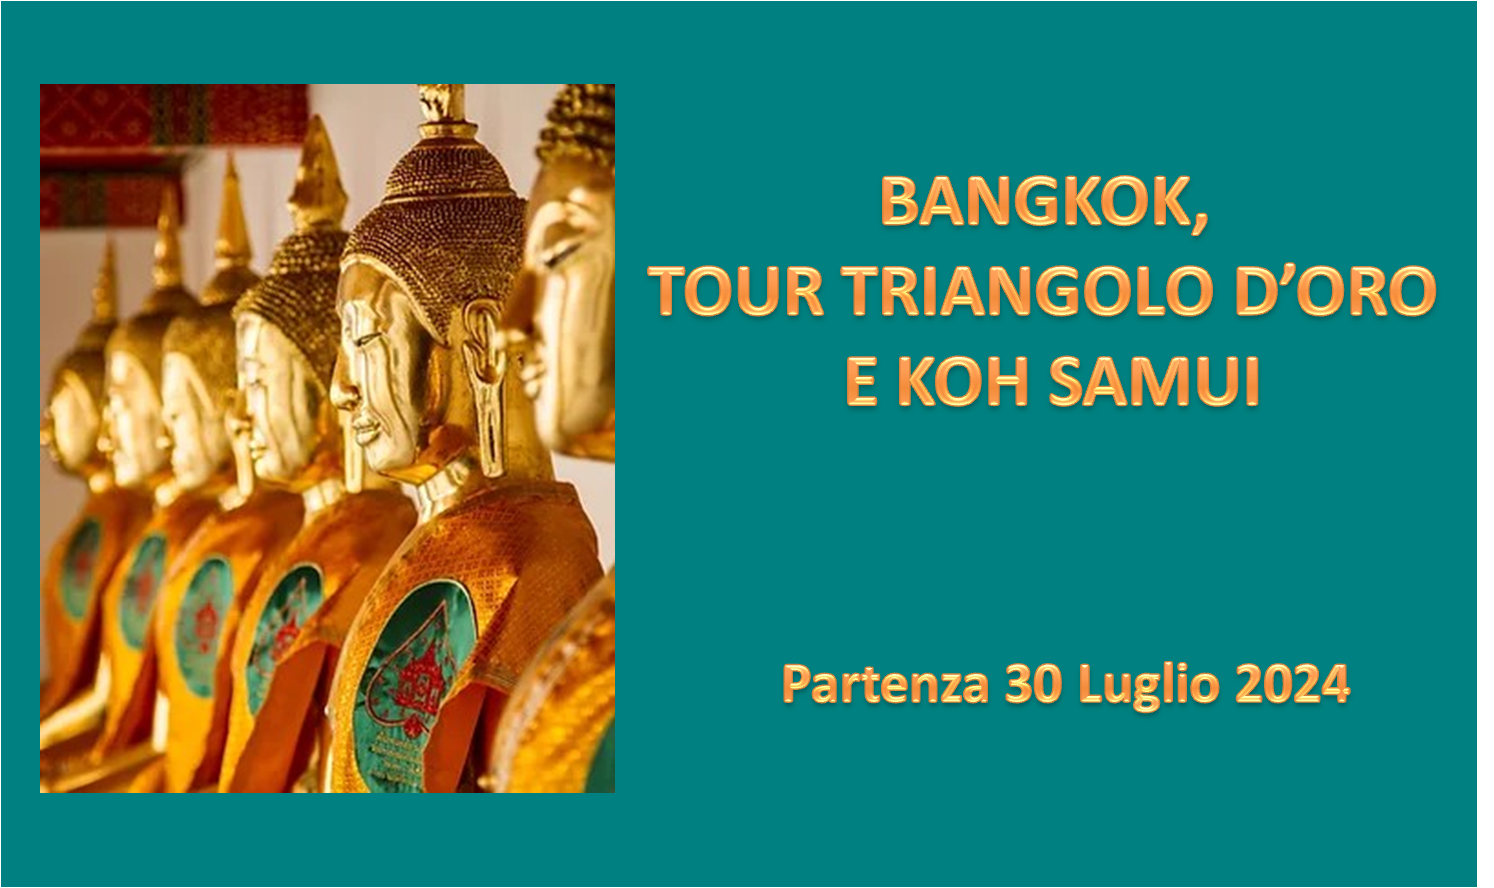 BANGKOK, TOUR TRIANGOLO D’ORO E KOH SAMUI